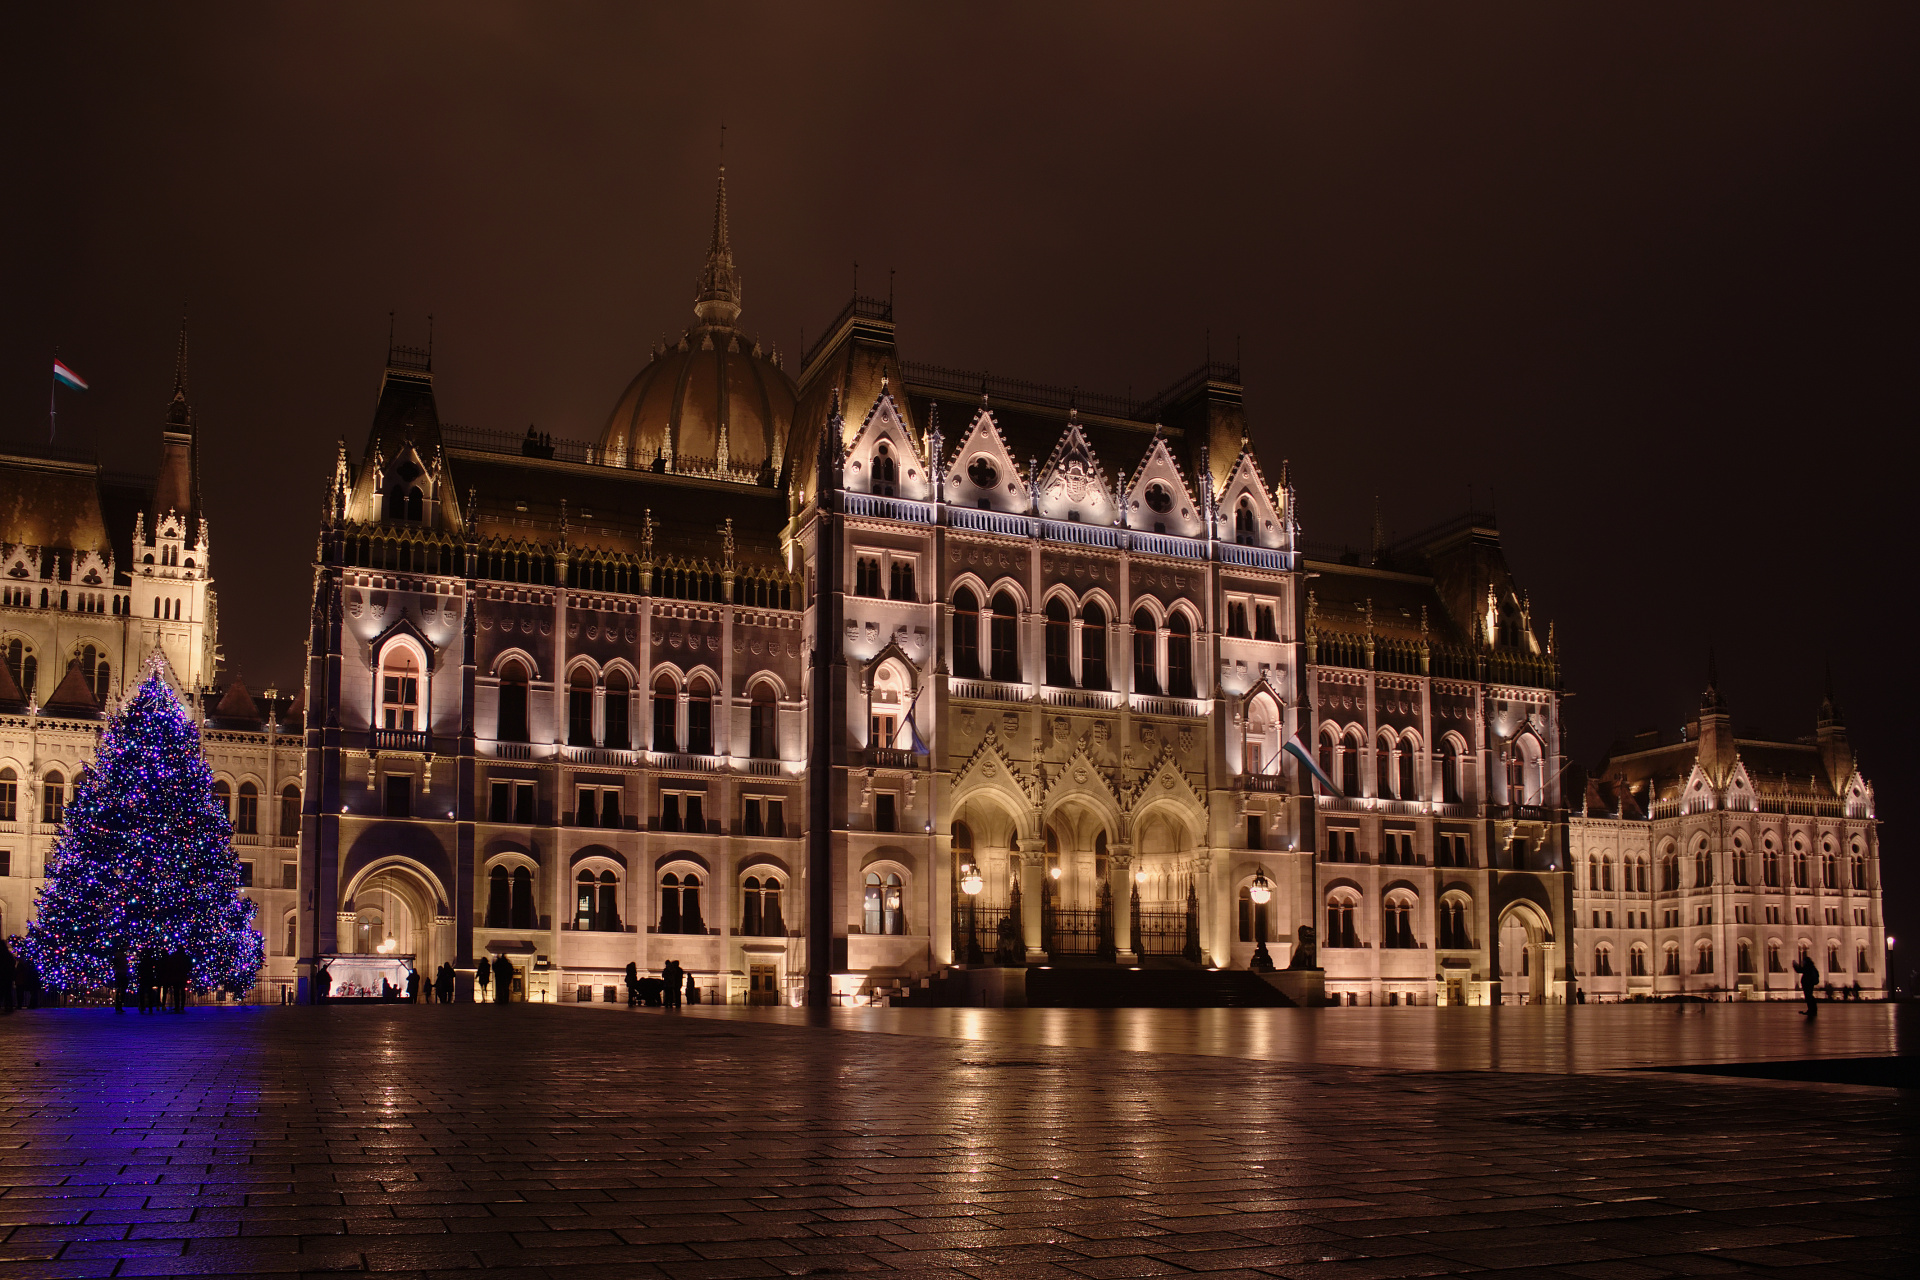 Országház - The Parliament Building (Travels » Budapest » Budapest at Night)